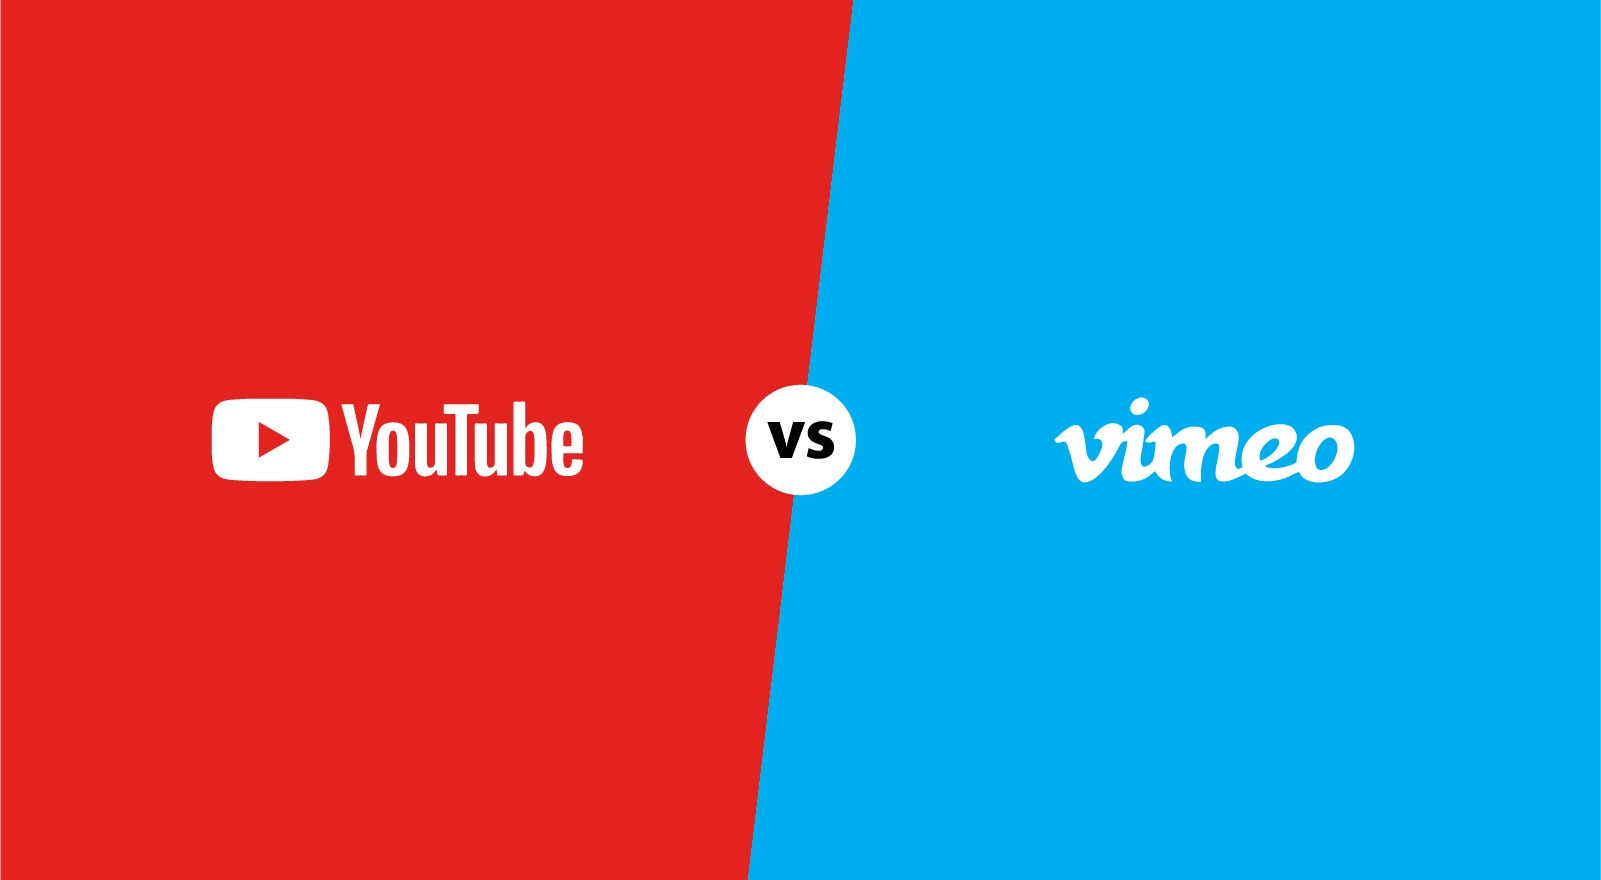 YouTube vs. Vimeo